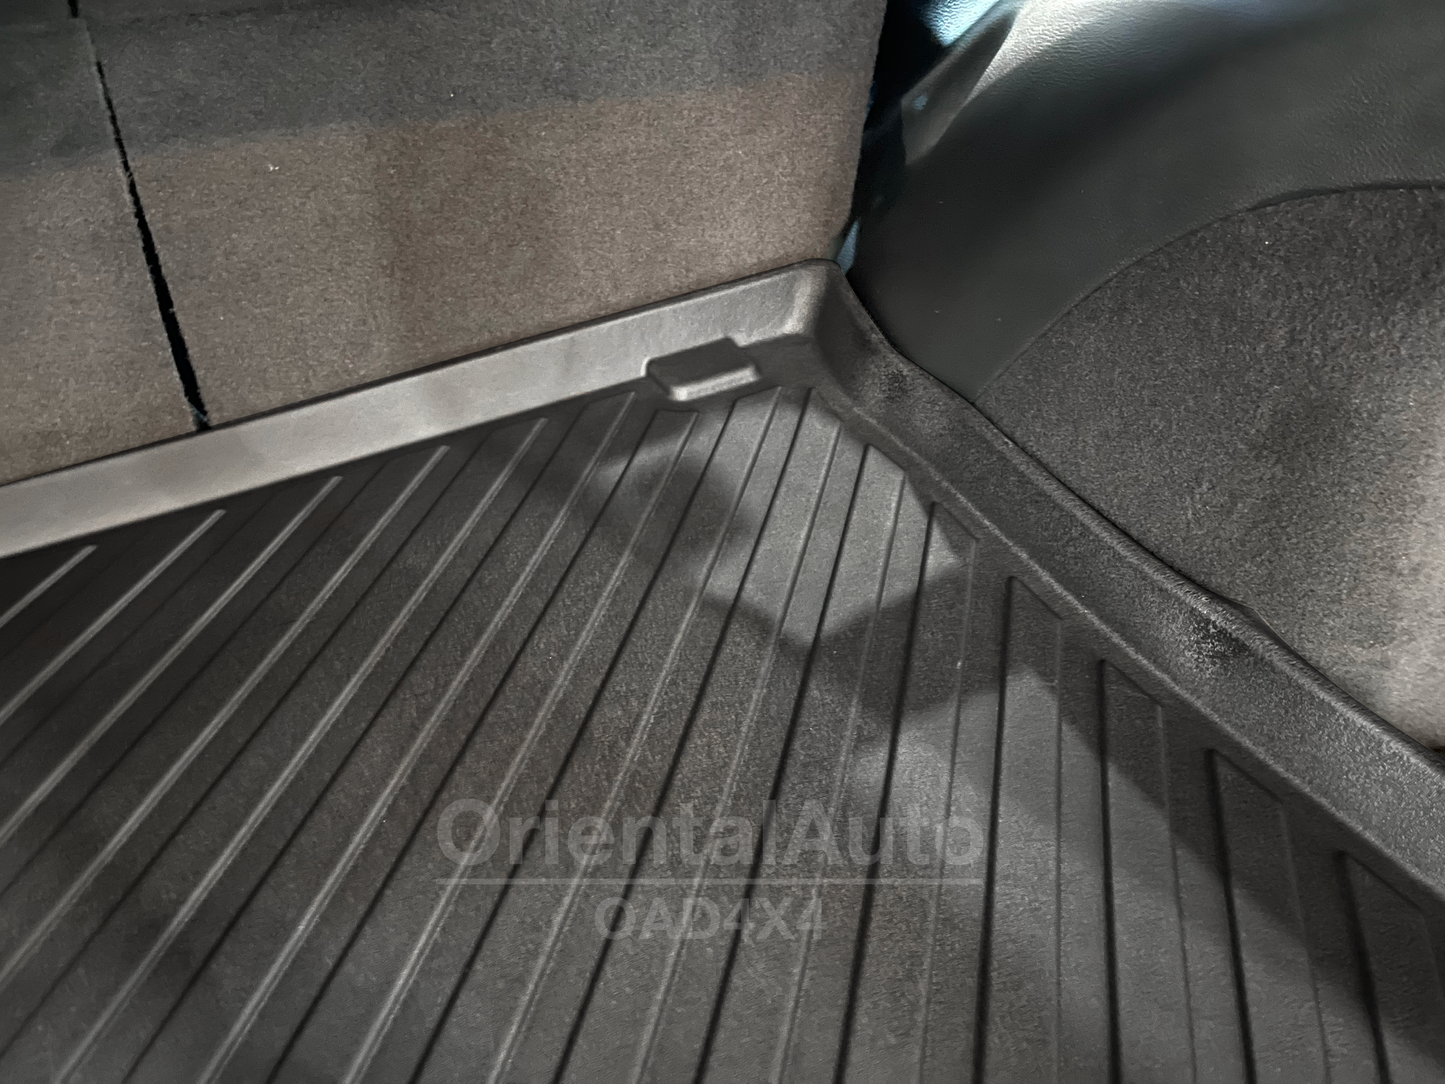 Pre-order TPE 5D Floor Mats & 3D Cargo Mat for Jeep Grand Cherokee WK 2010-2021 Door Sill Covered Car Floor Liner with Upper Detachable Carpet + Boot Mat